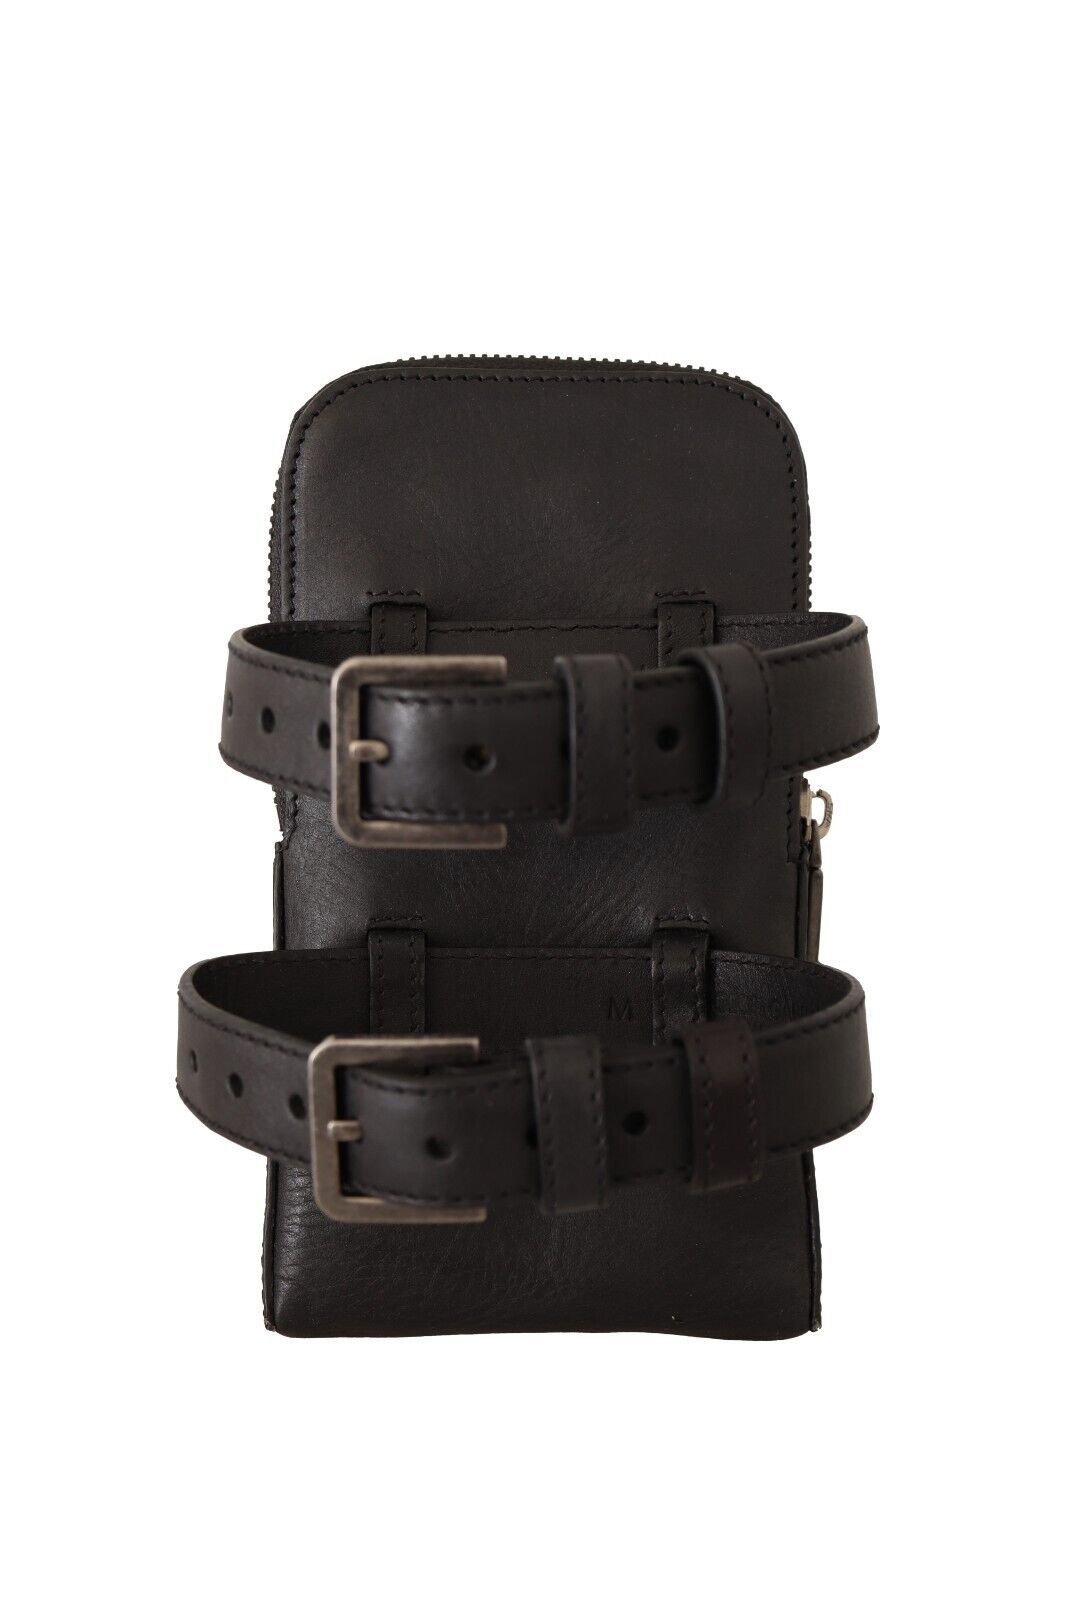 Dolce & Gabbana Black in pelle nera porta doppia cintura cinghia